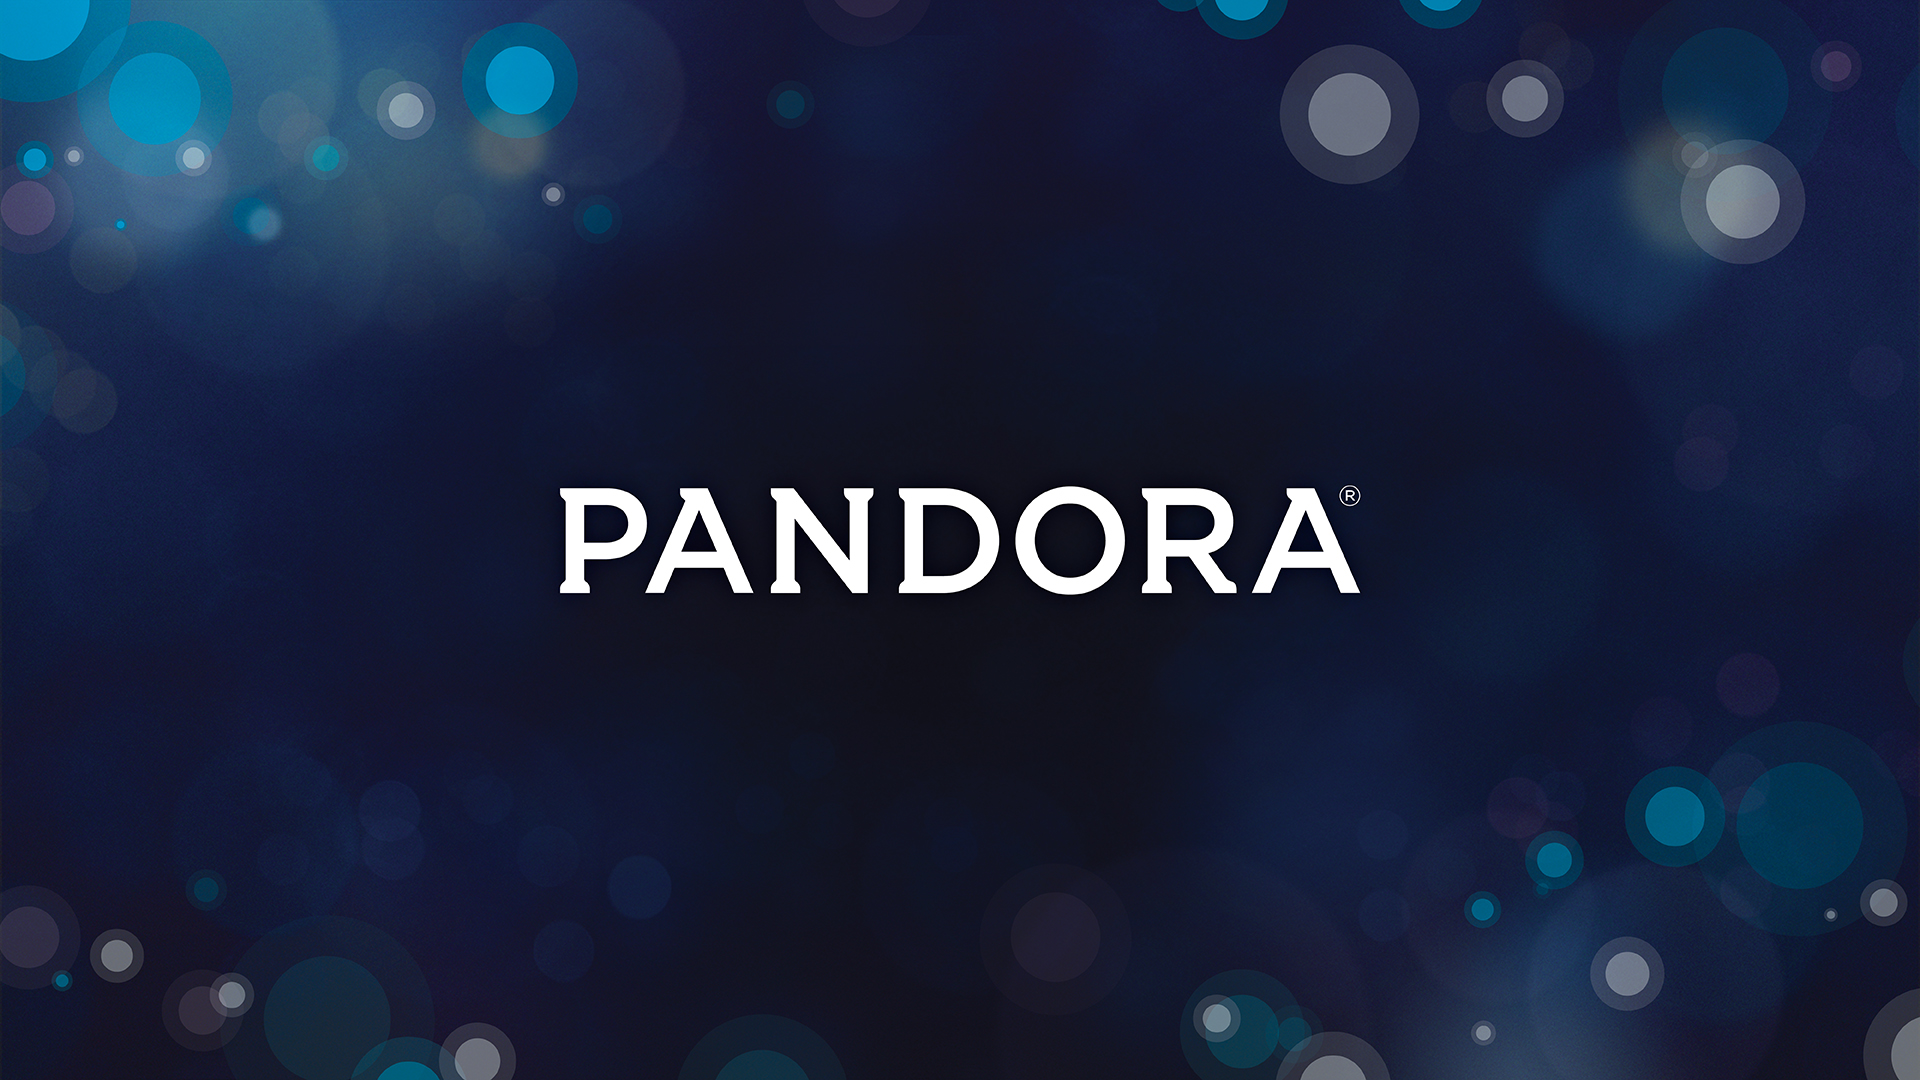 Pandora Aus launching Warehouse event, on-demand service next month?